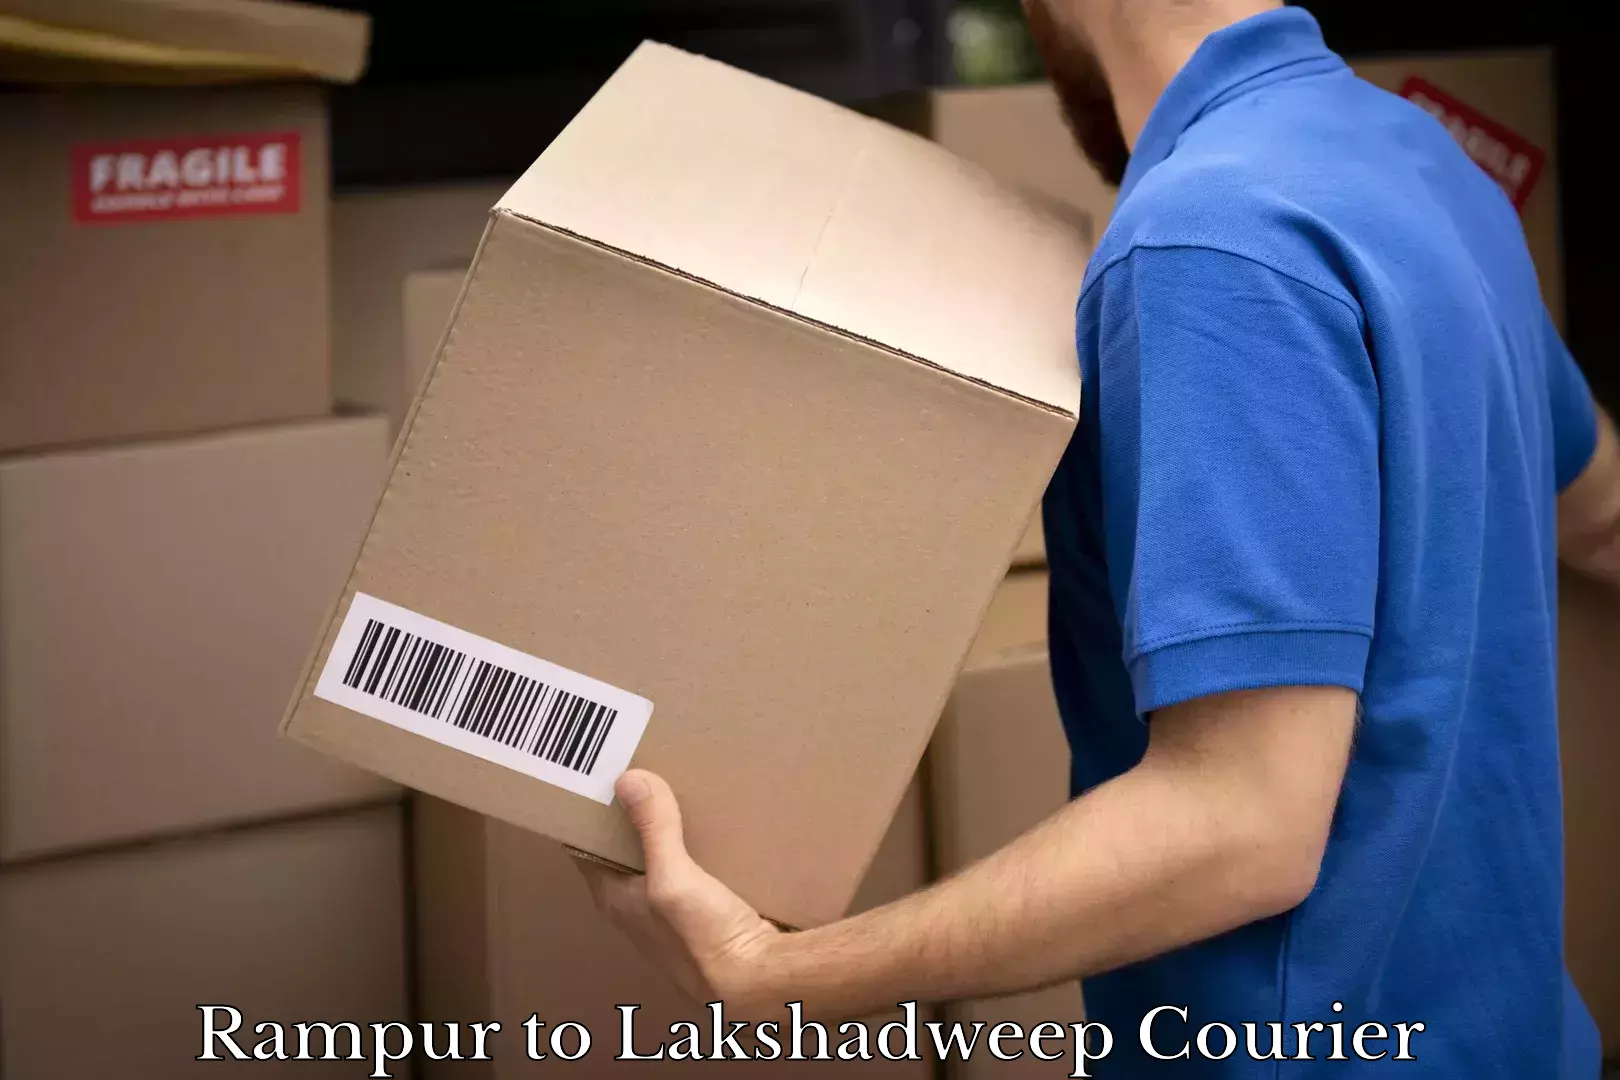 Global shipping networks Rampur to Lakshadweep